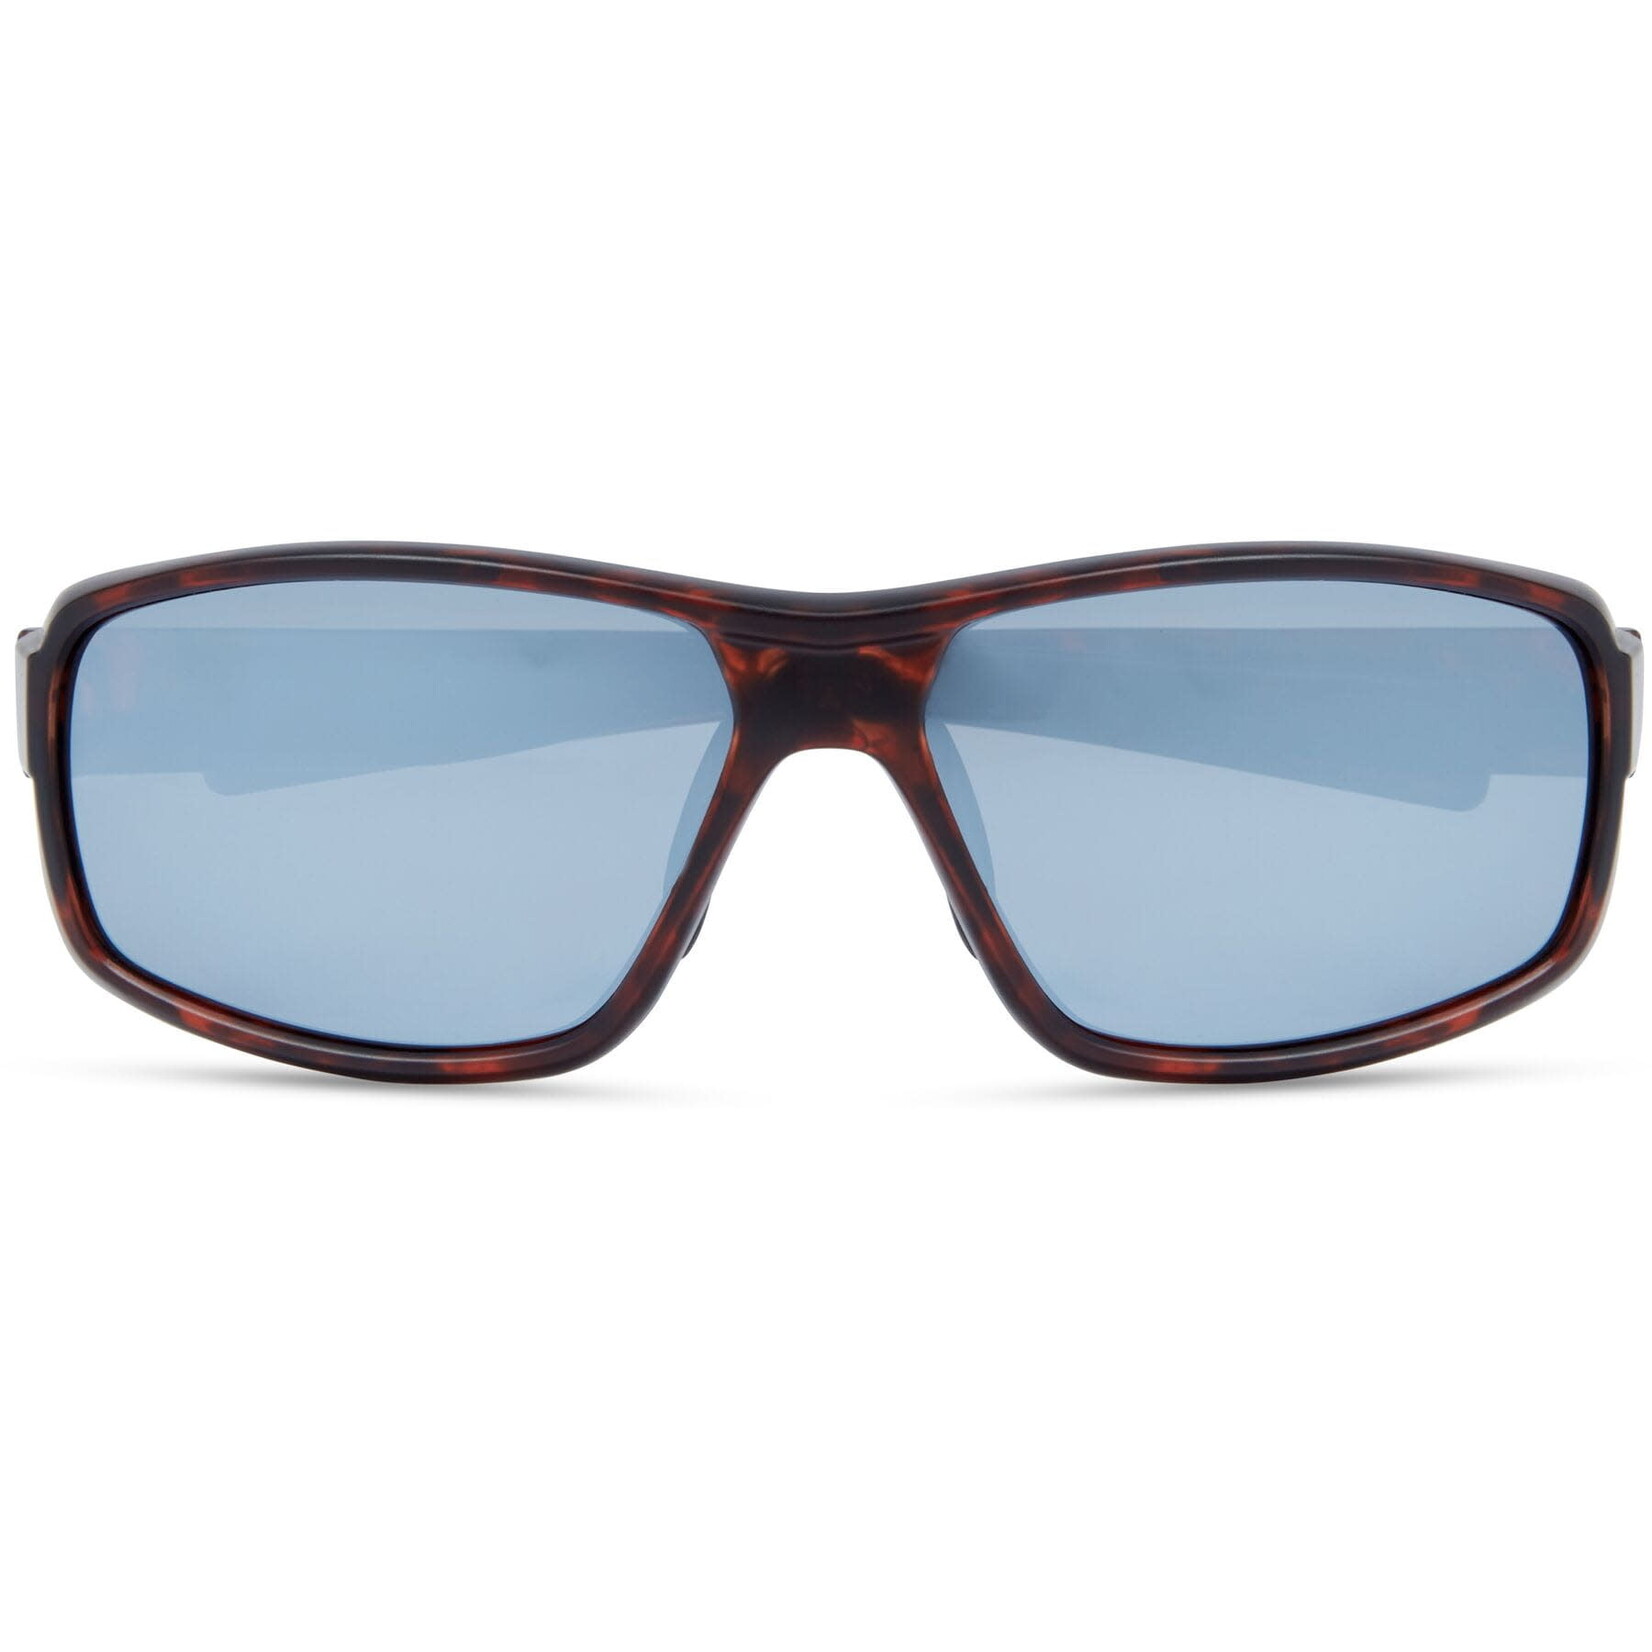 Madison Madison Target Sunglasses - brown tortoiseshell / silver mirror